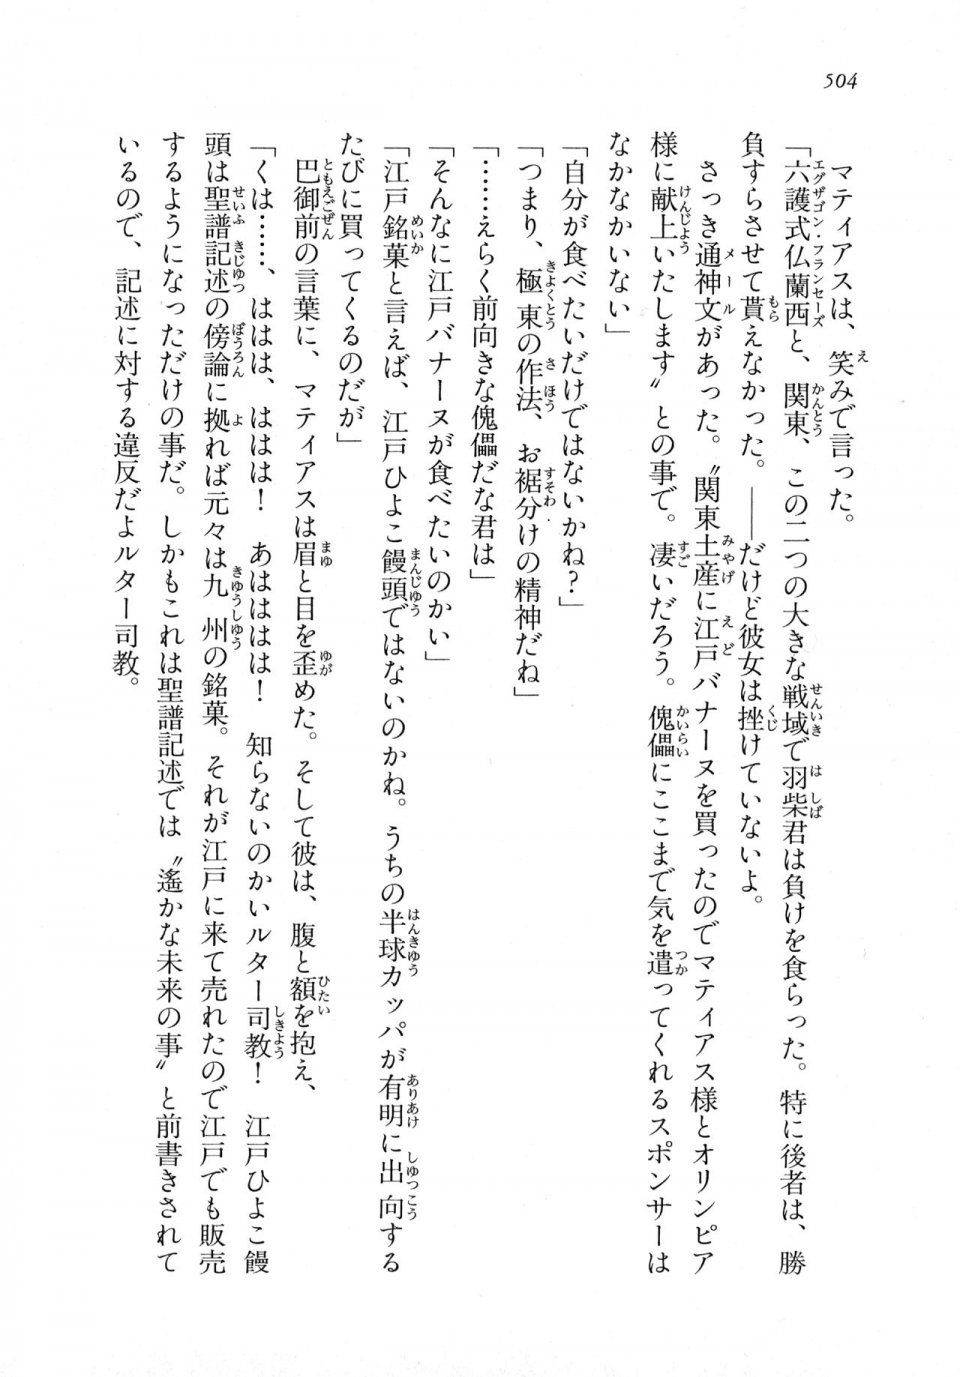 Kyoukai Senjou no Horizon LN Vol 18(7C) Part 1 - Photo #504